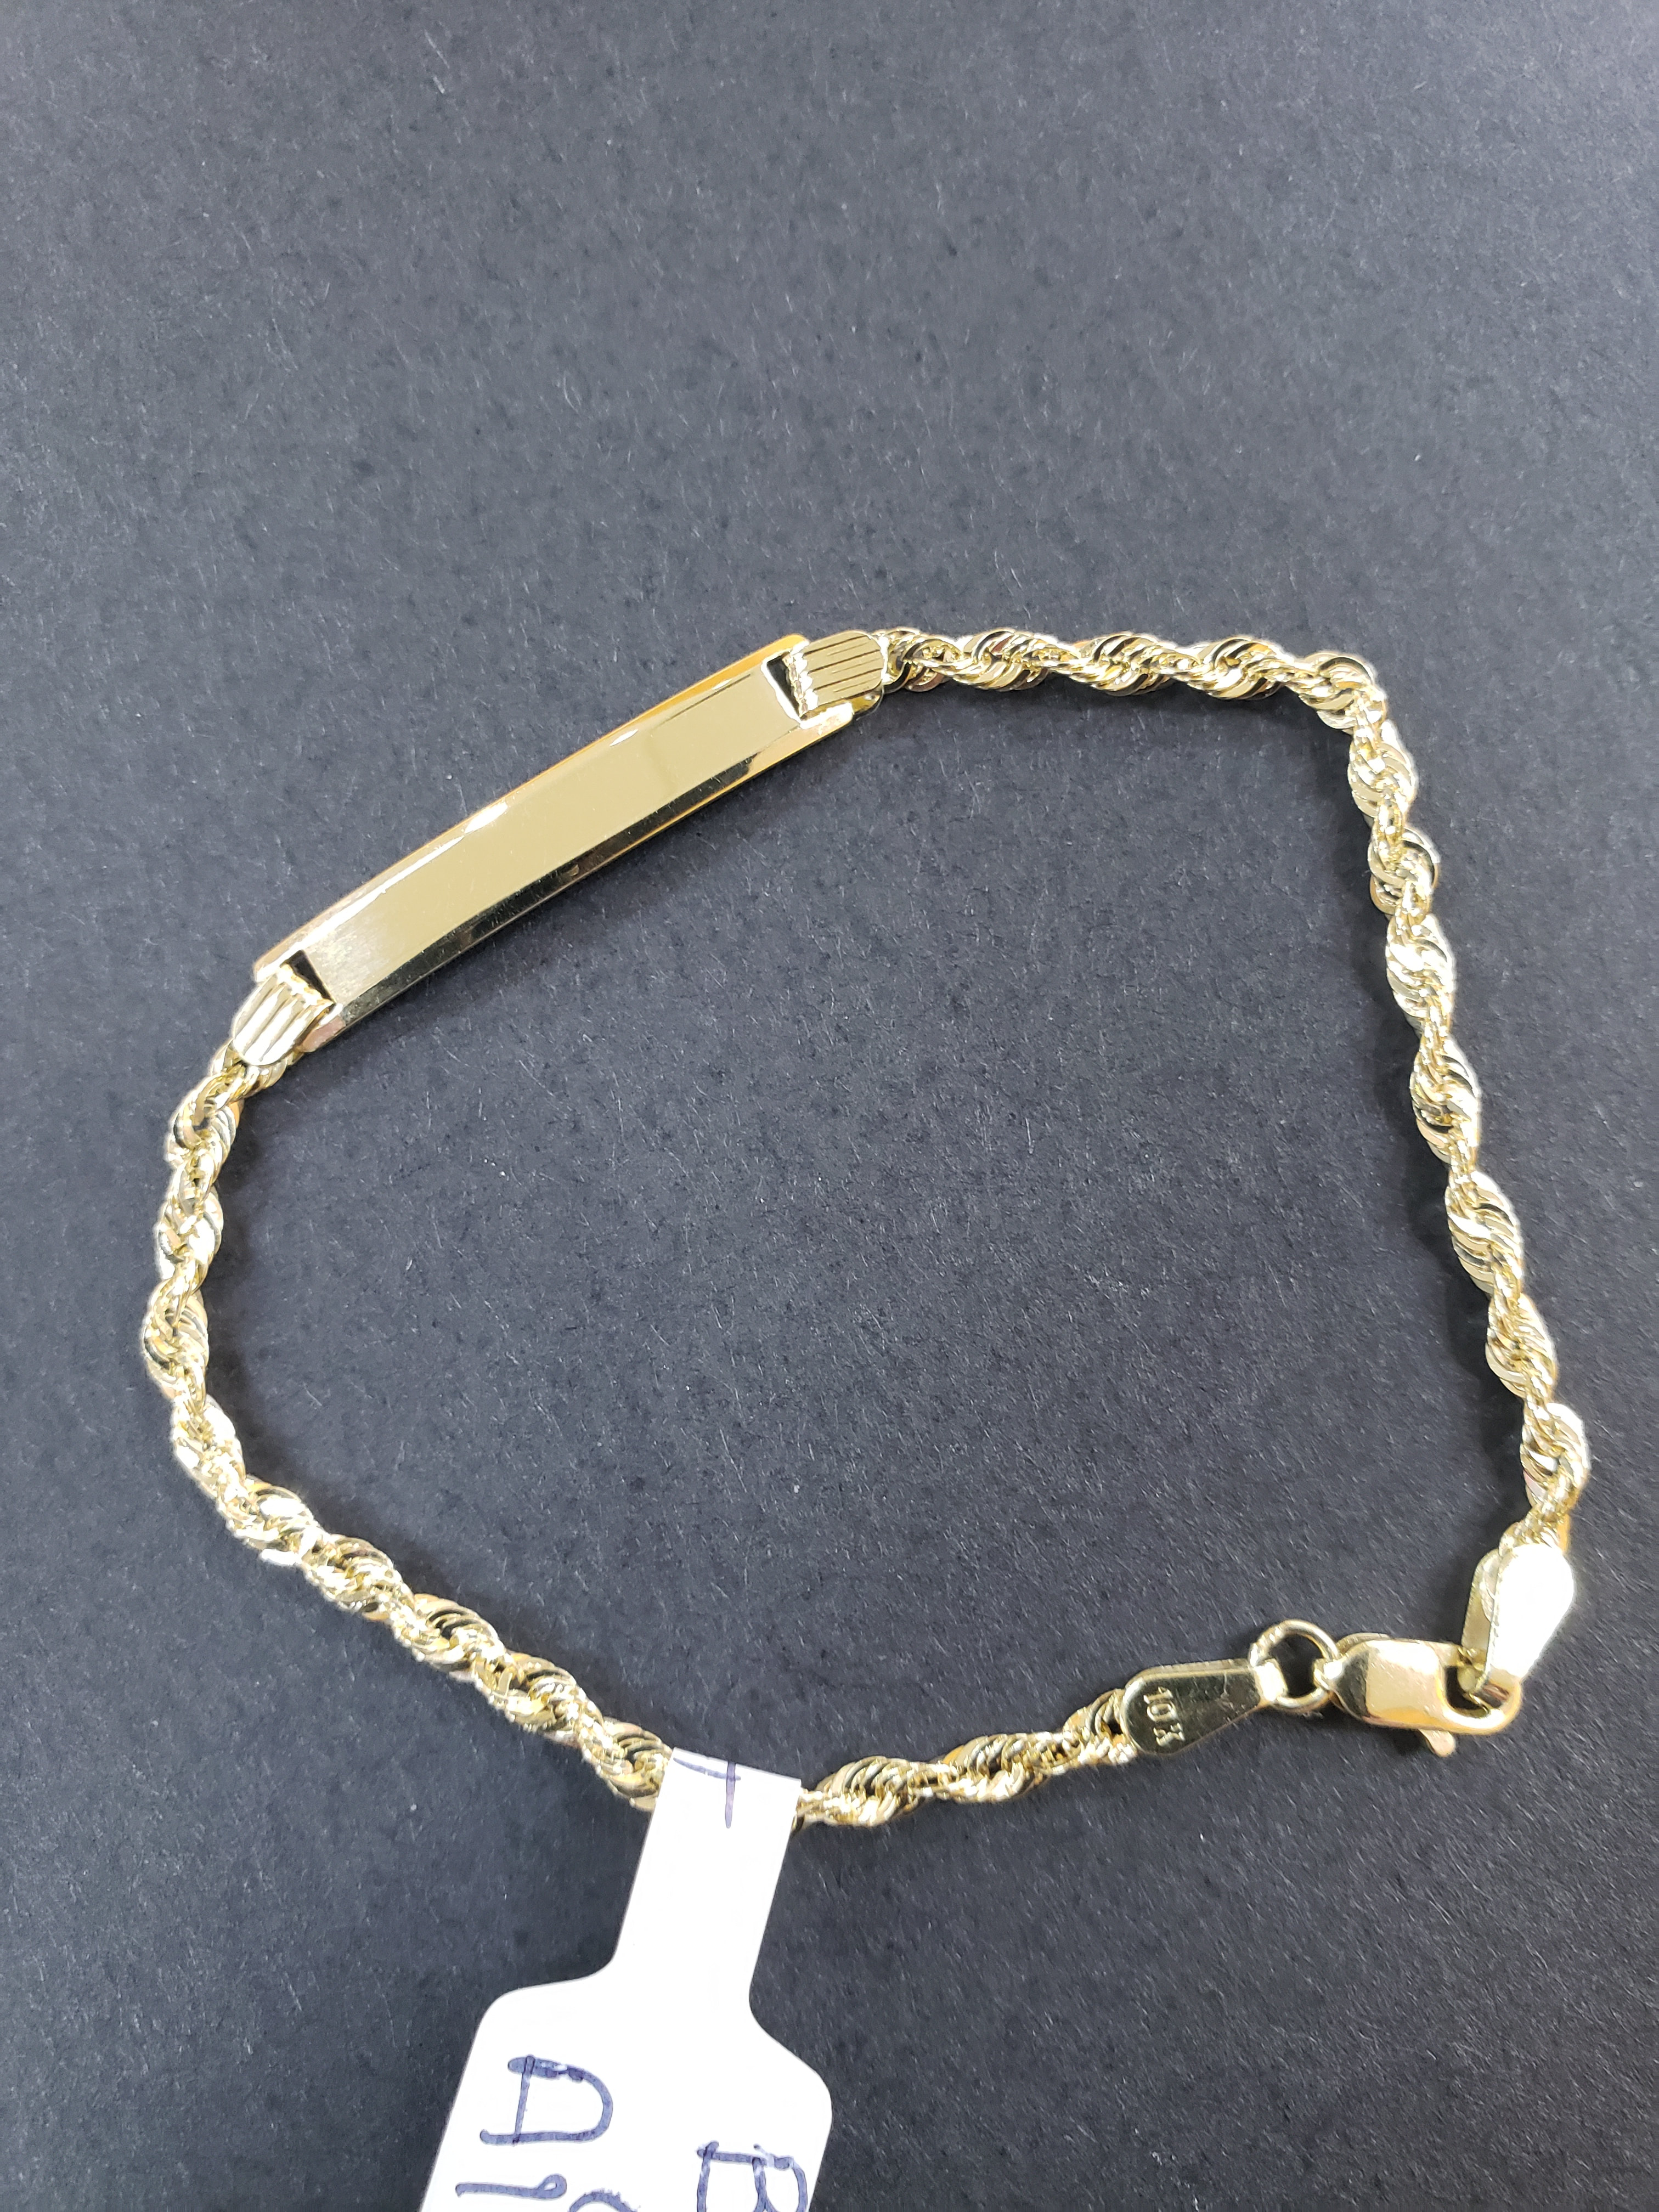 Solid Gold Baby Bracelet - MELANIE MARiE